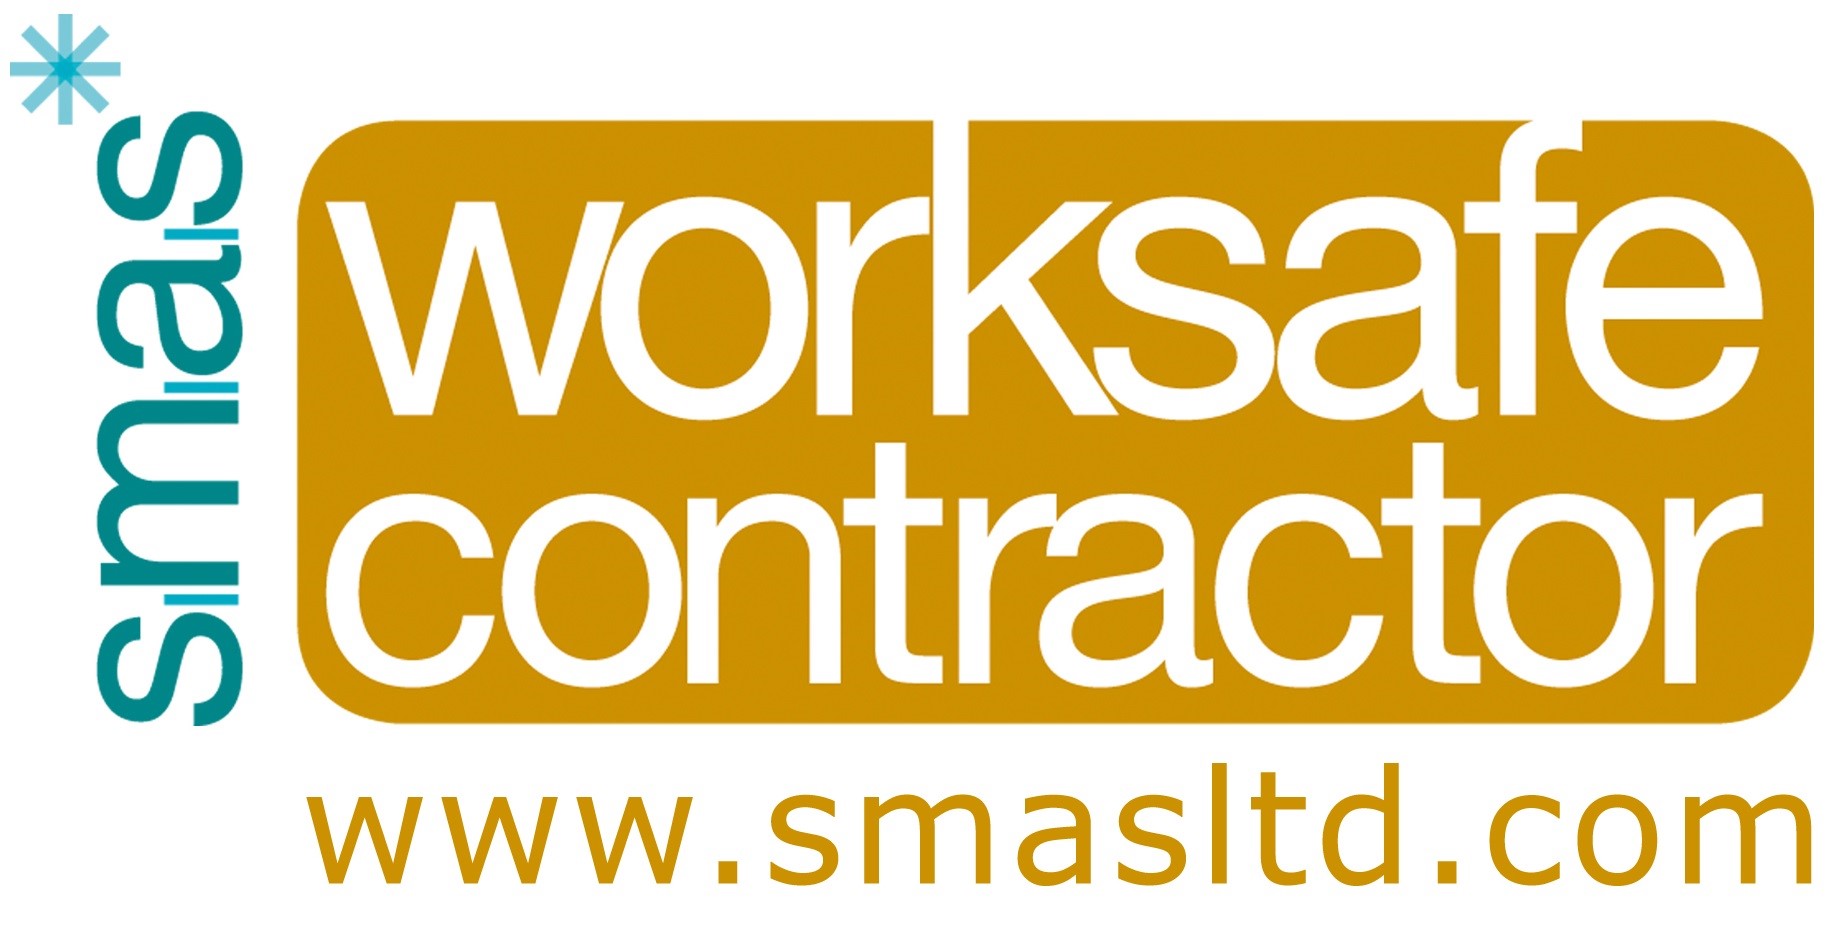 Worksafe contrator UK